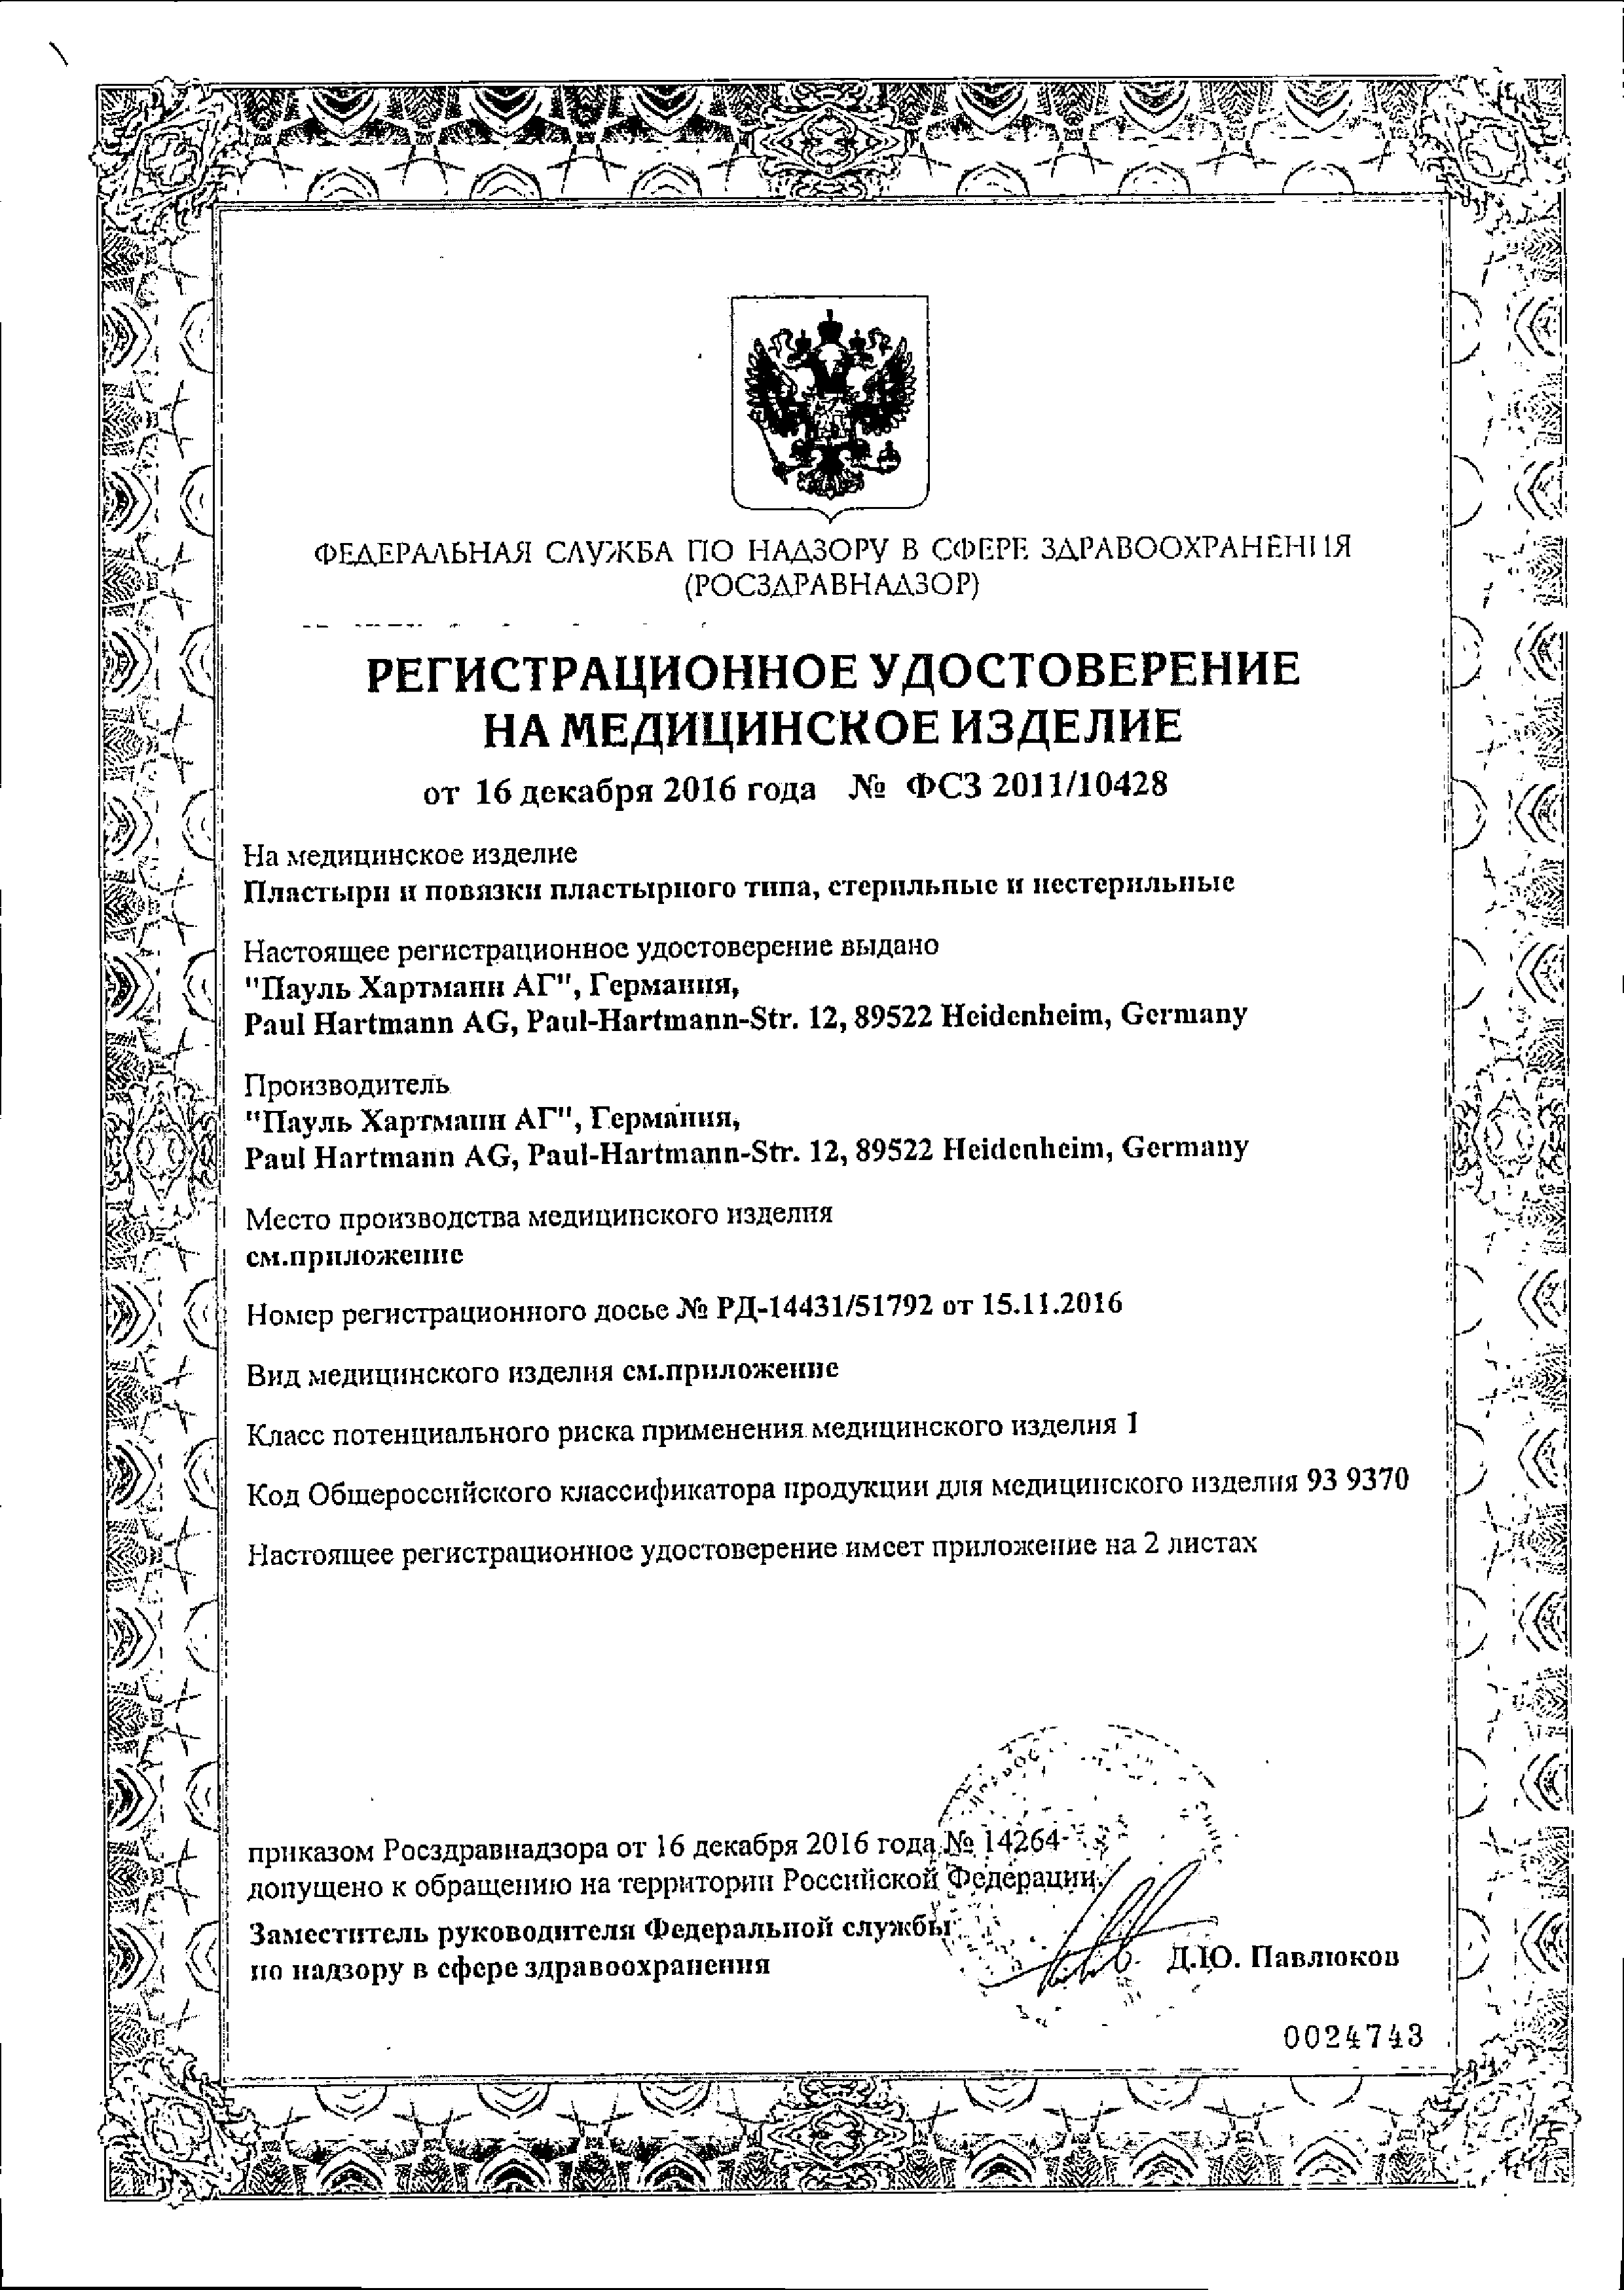 Omnipor Пластырь фиксирующий сертификат